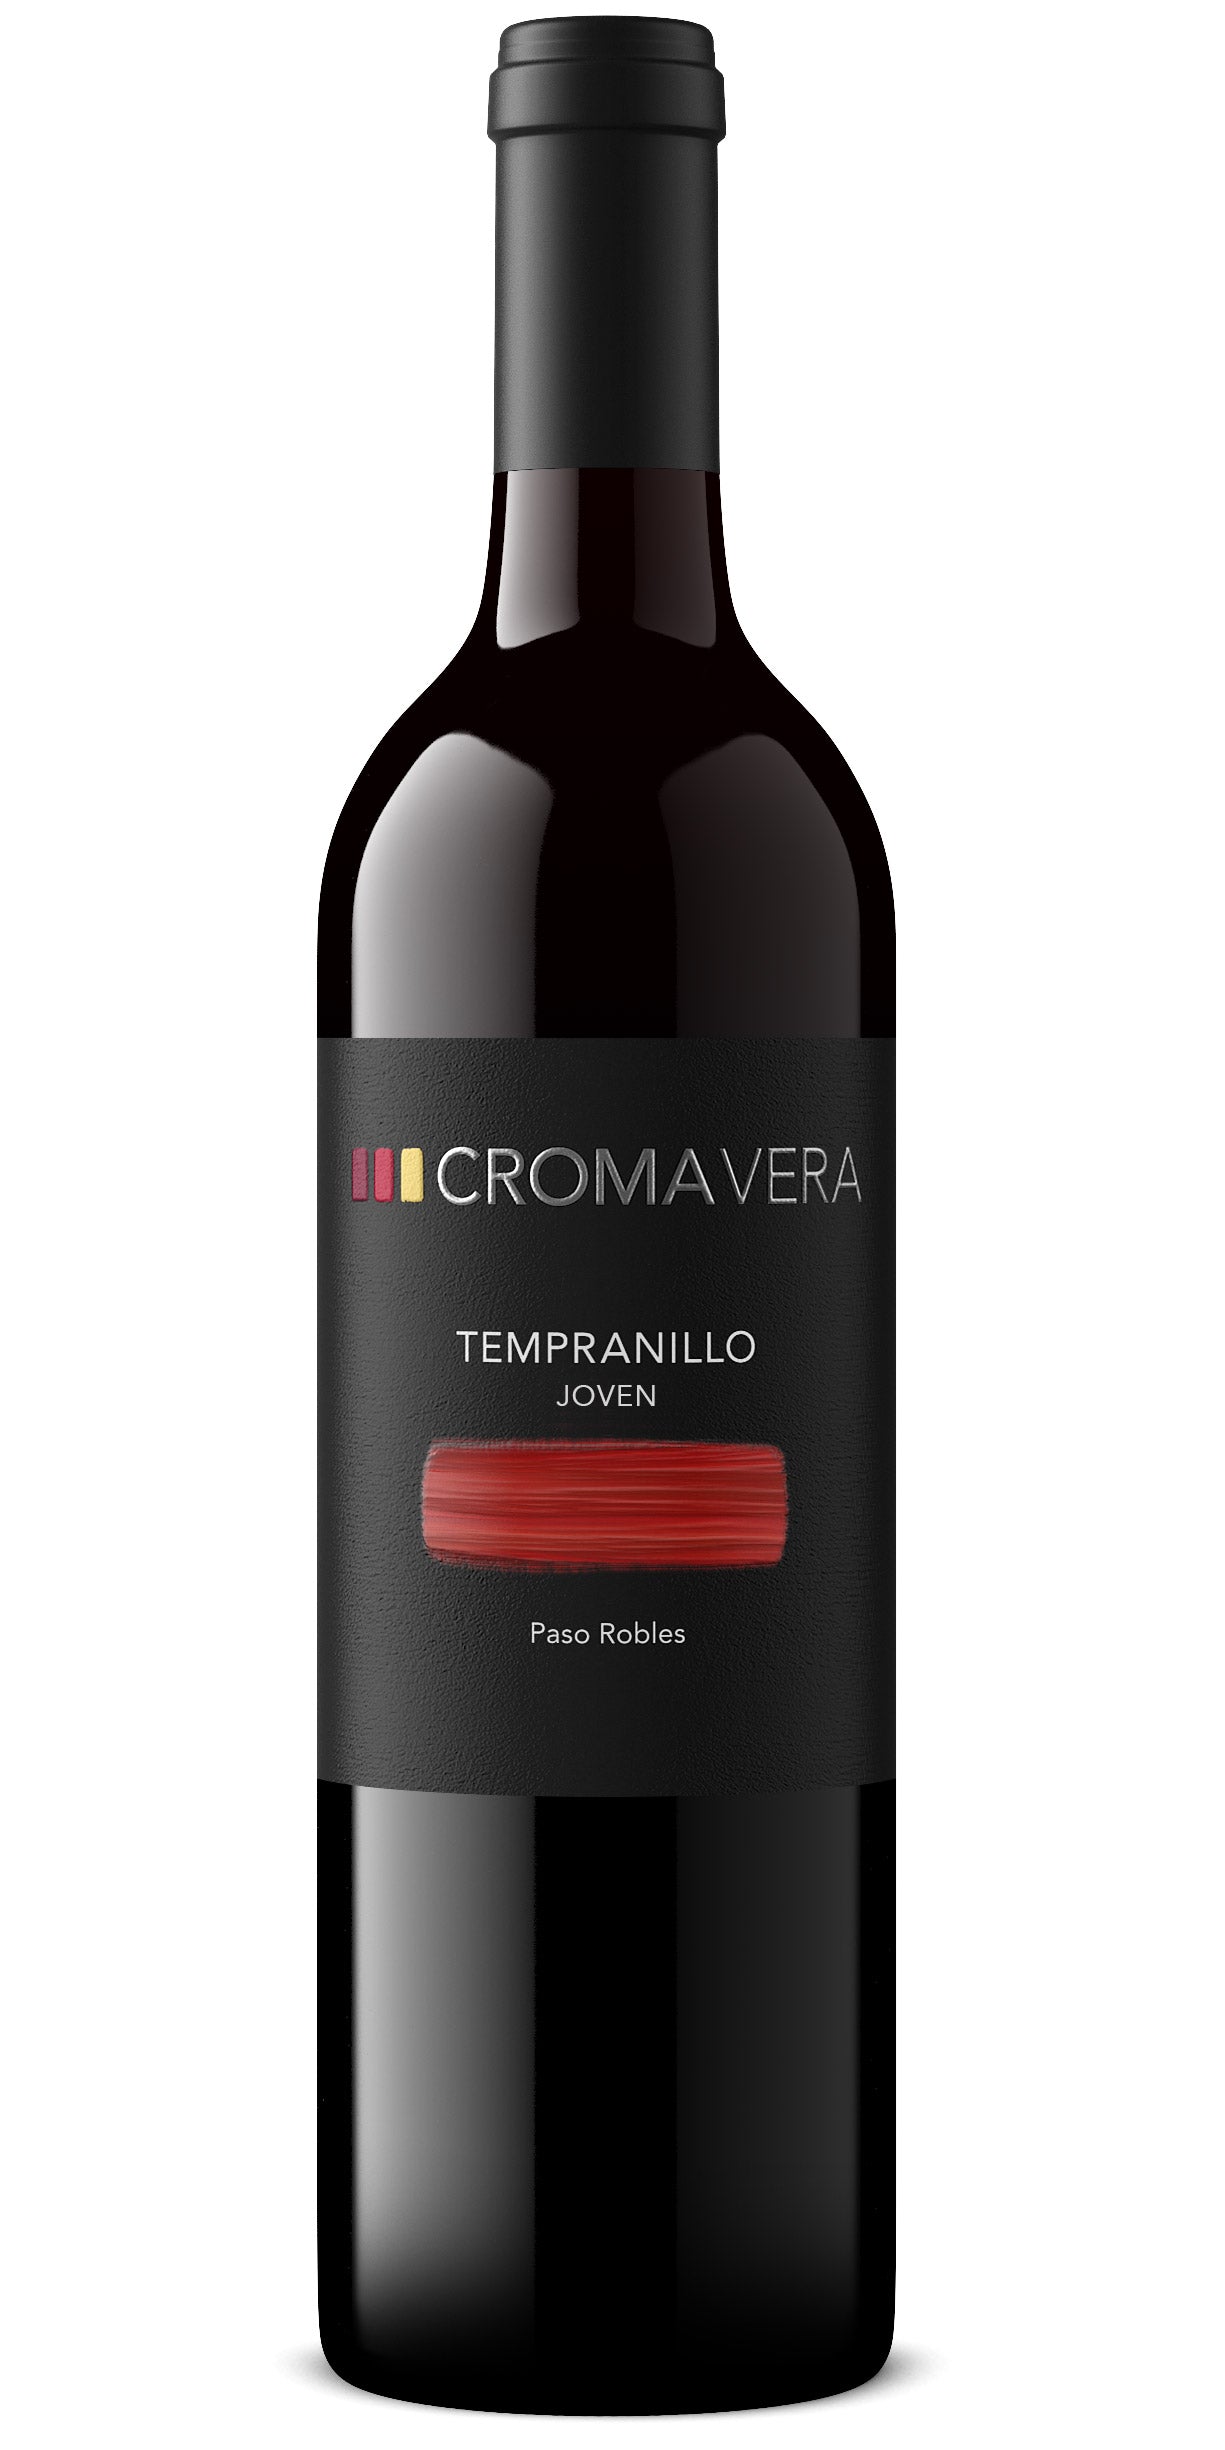 A bottle of Croma Vera Tempranillo Joven